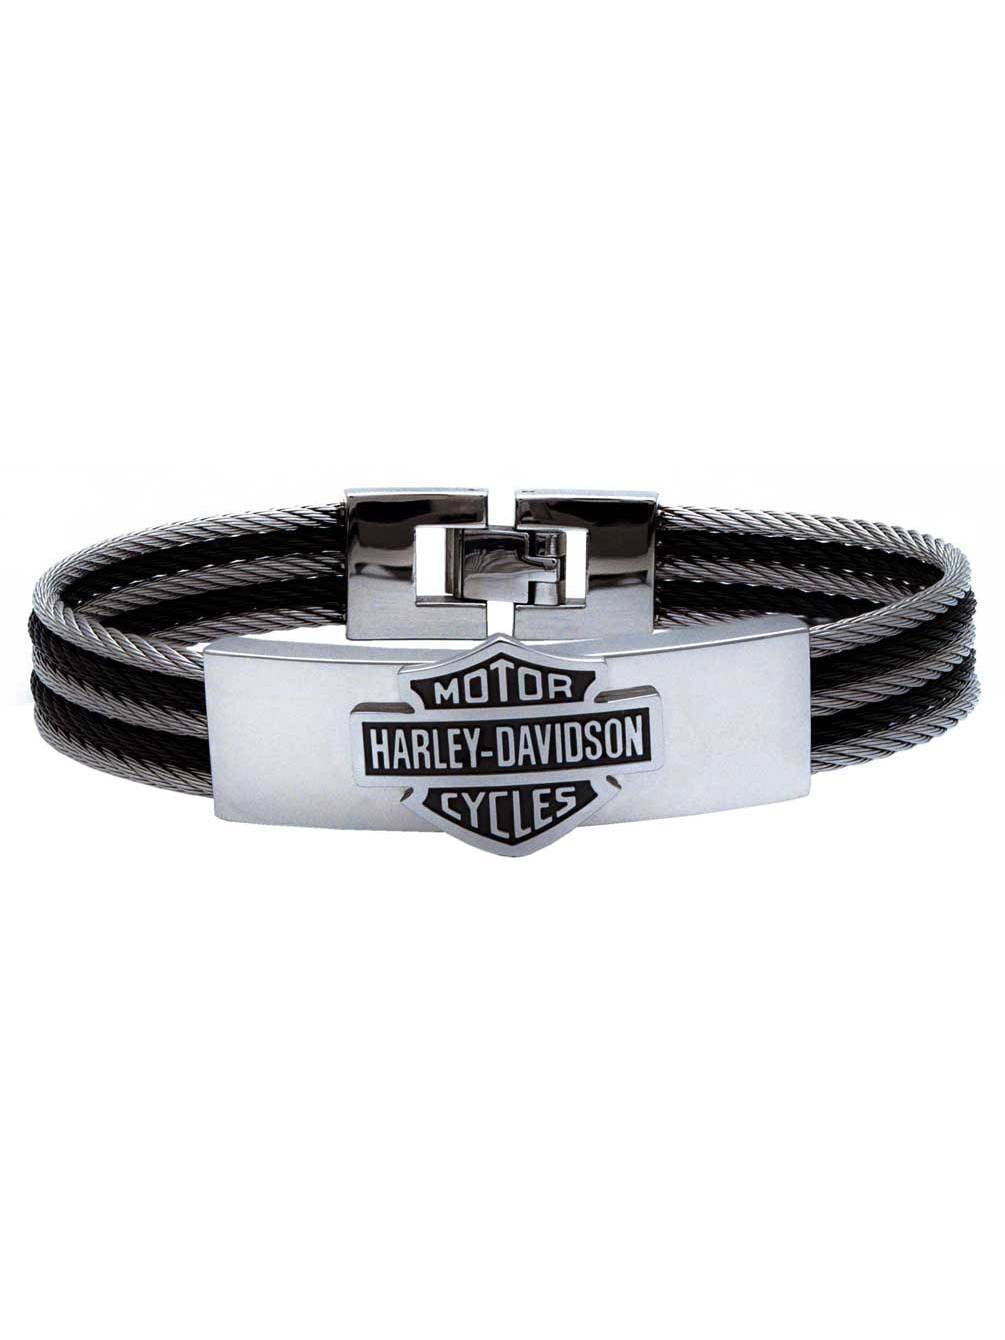 Harley mens bracelet - jewelry - by owner - sale - craigslist